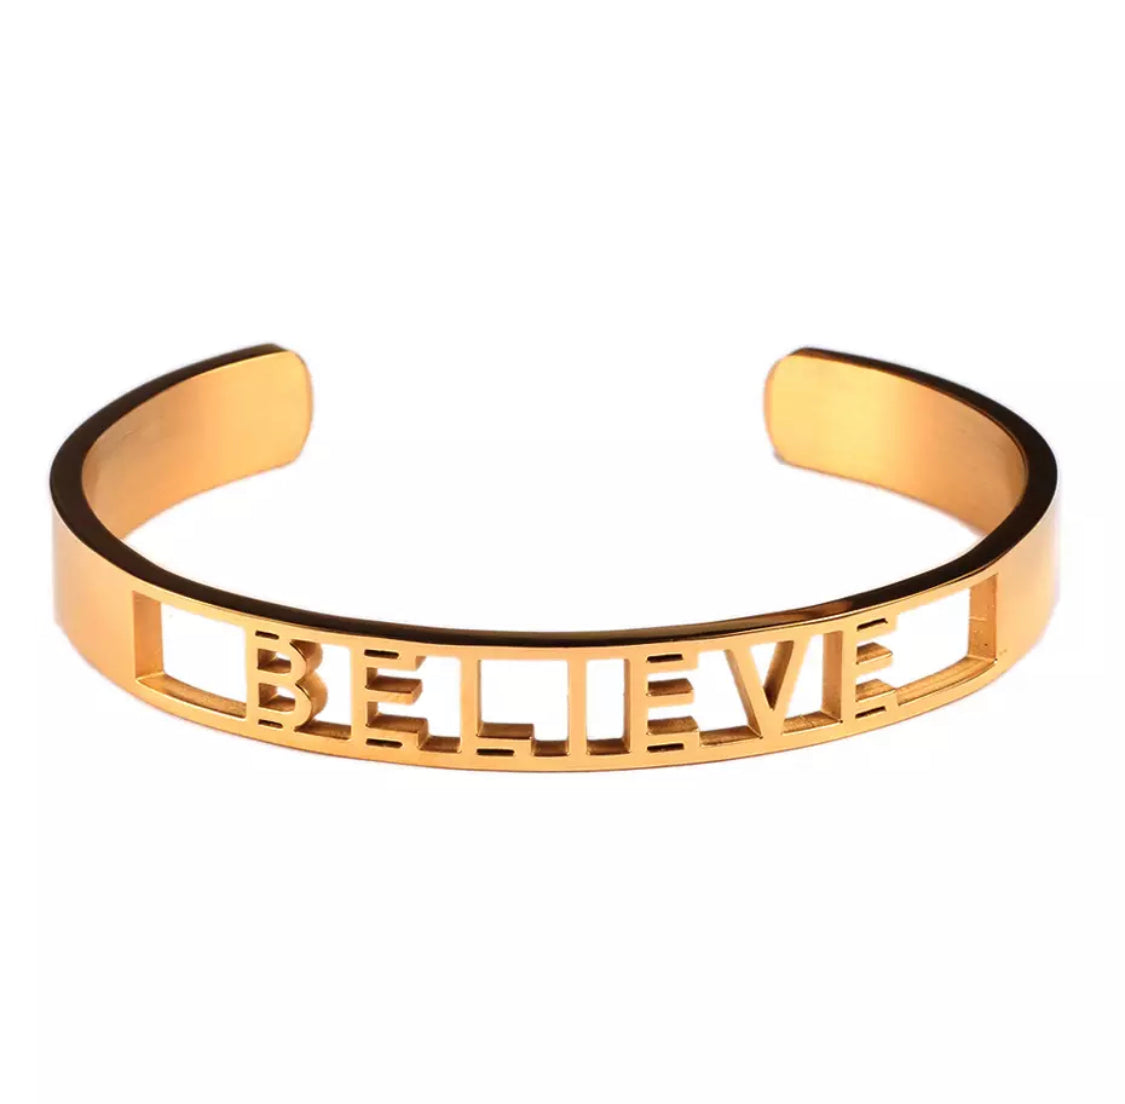 Believe (Gold)